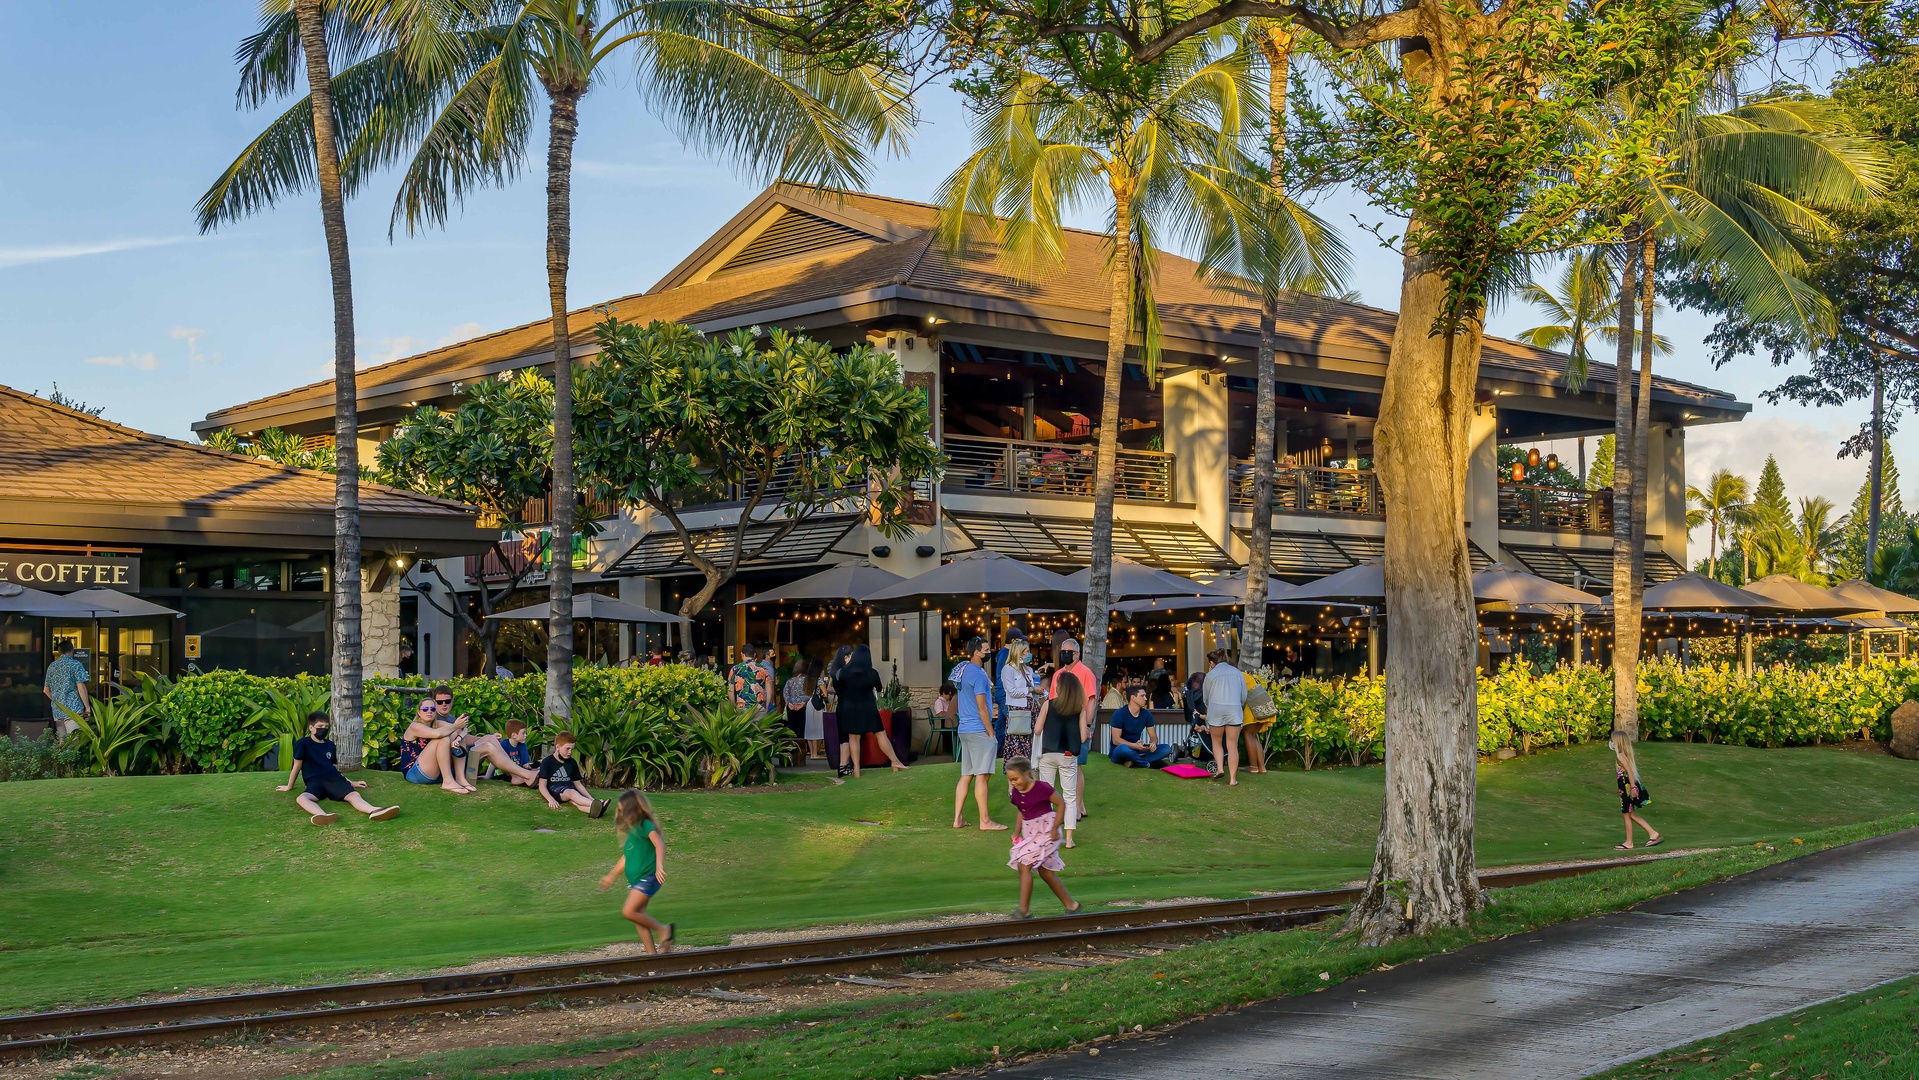 Kapolei Vacation Rentals, Ko Olina Beach Villas B310 - Shopping and dining on the island.